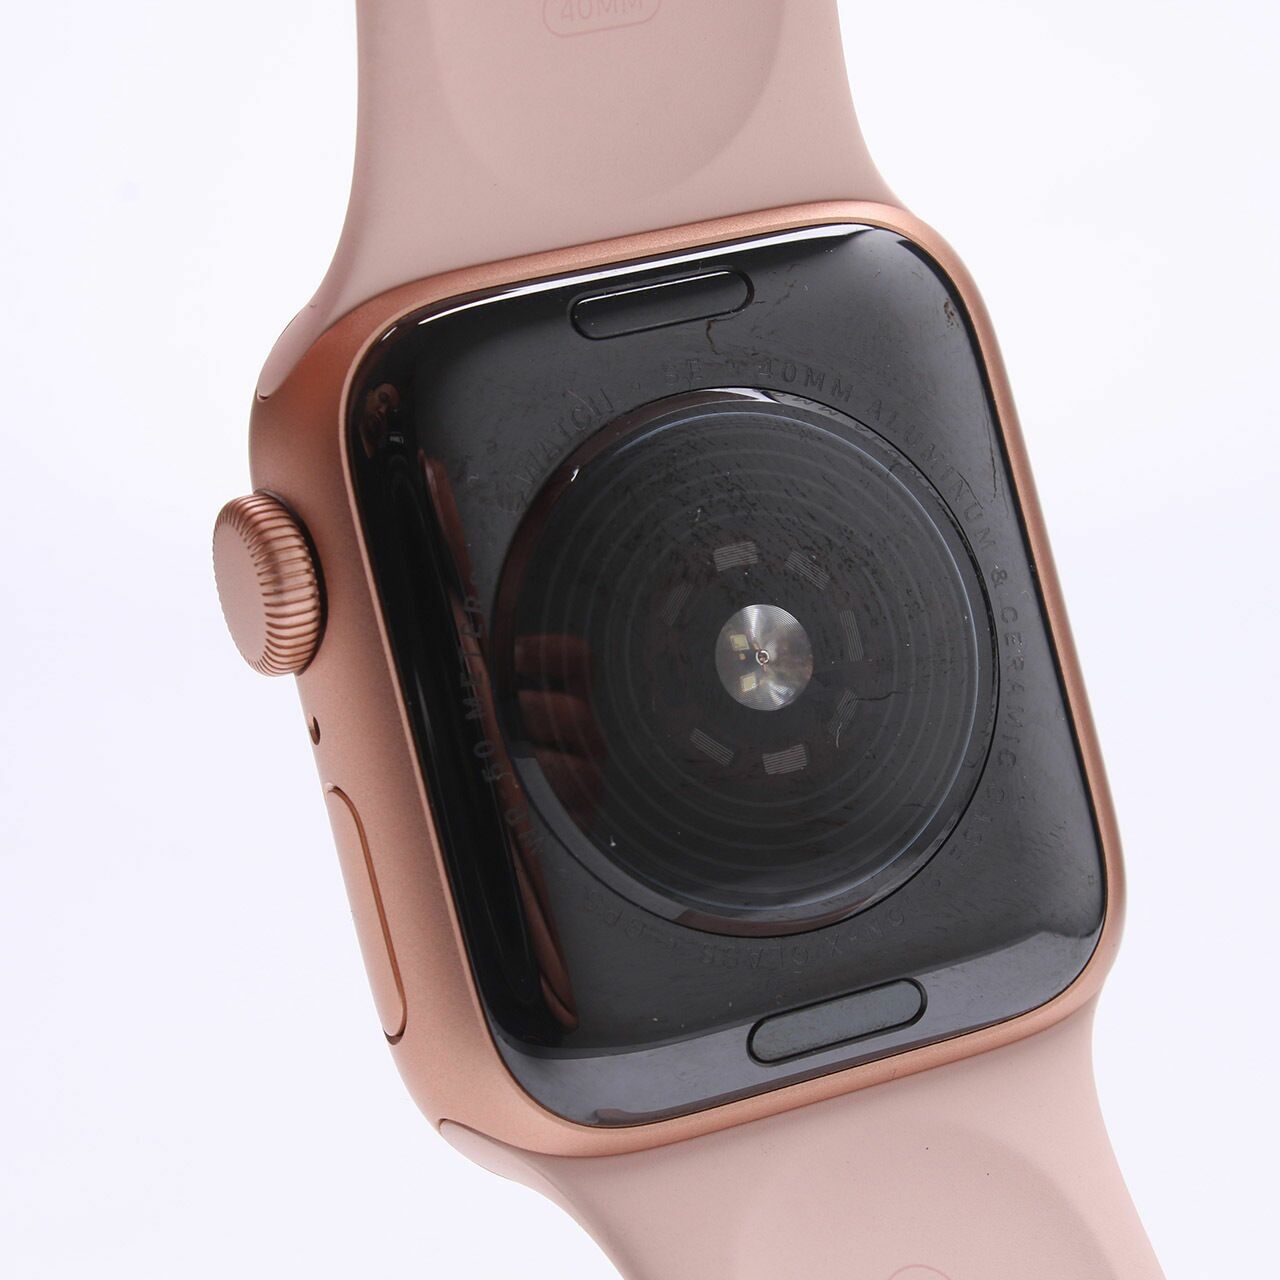 Apple Watch SE Gold Aluminum Case Pink Sand Sport Band Watch